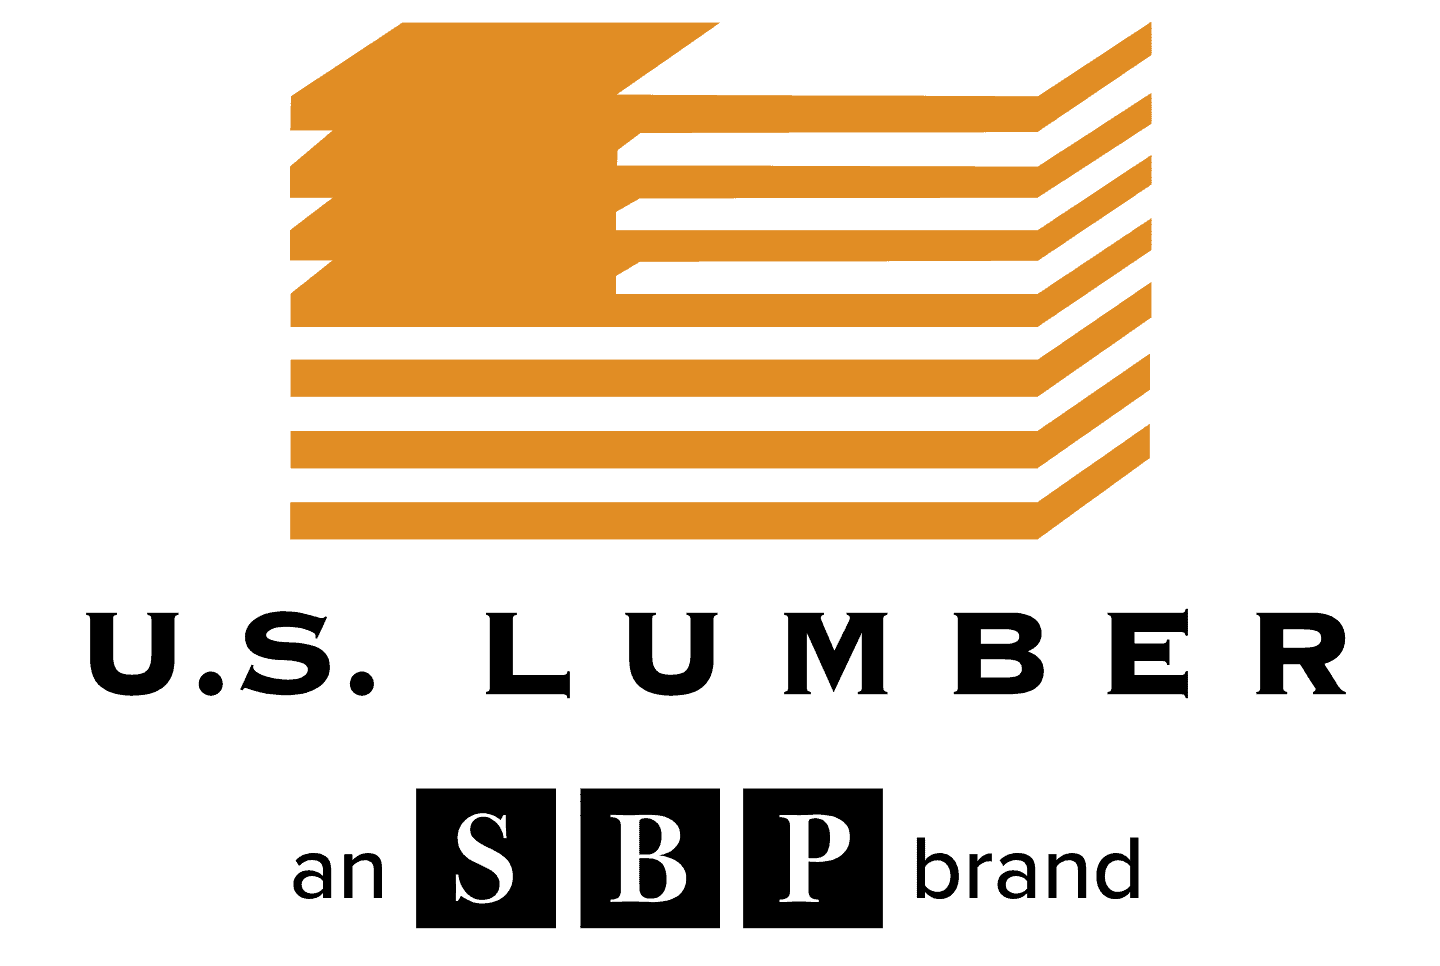 U.S Lumber